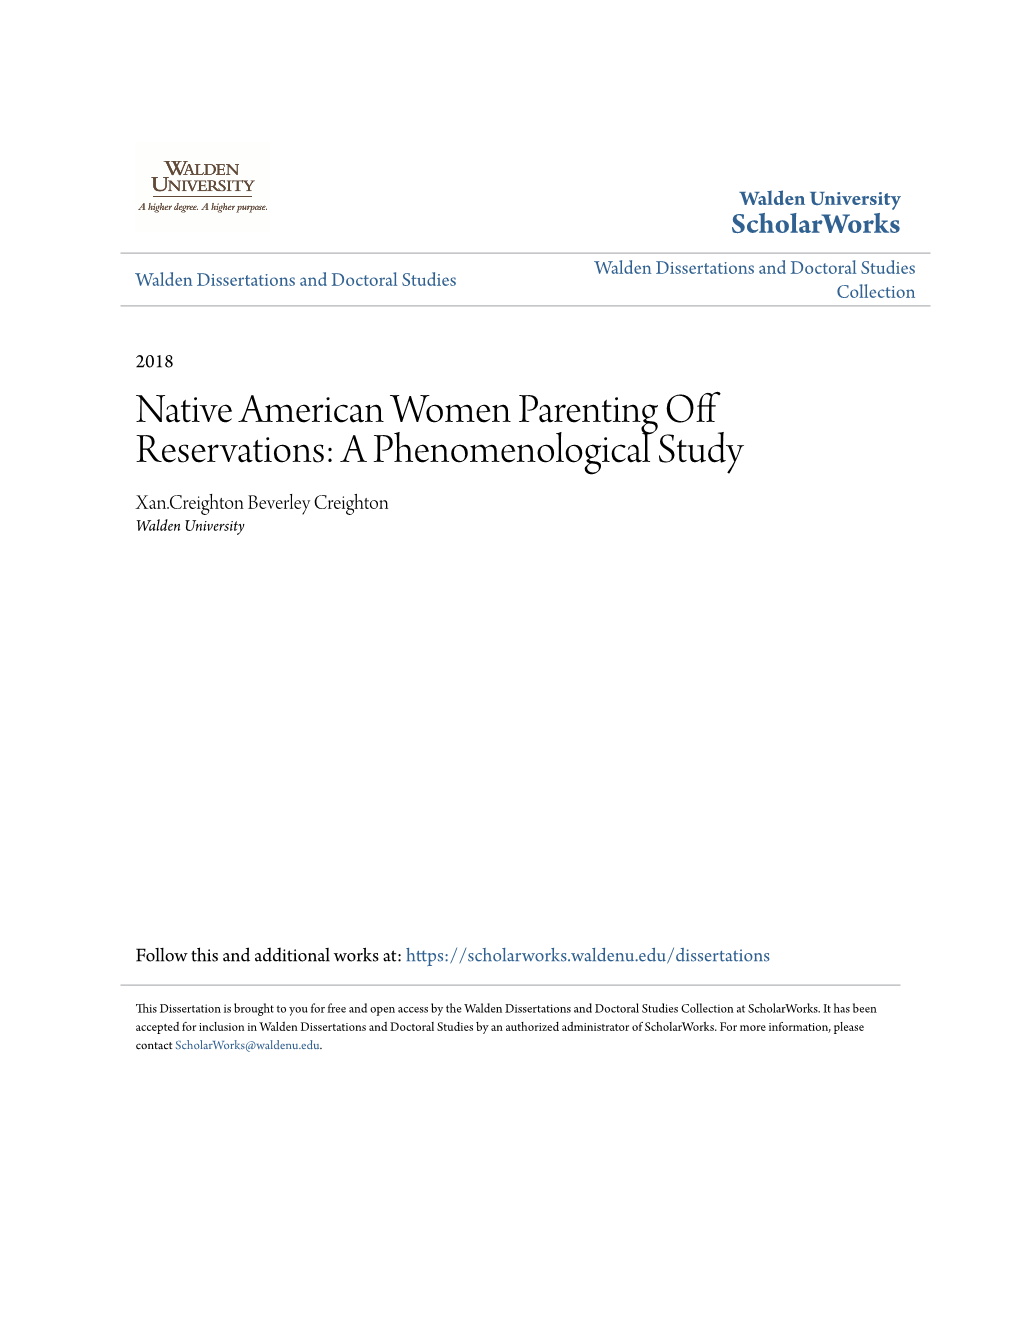 Native American Women Parenting Off Reservations: a Phenomenological Study Xan.Creighton Beverley Creighton Walden University